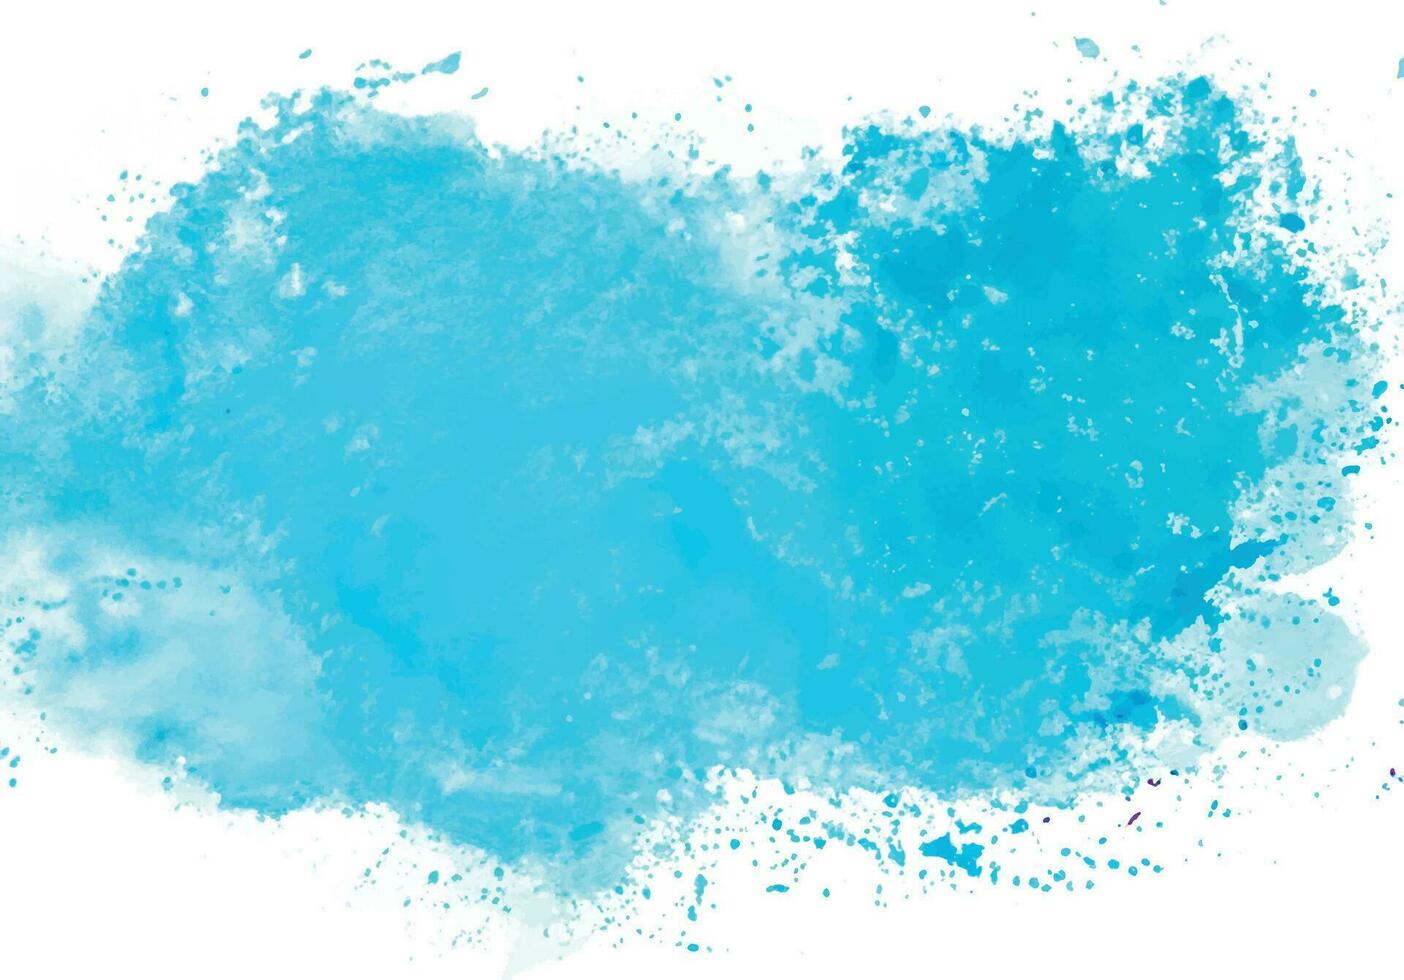 Watercolor splash stain background vector